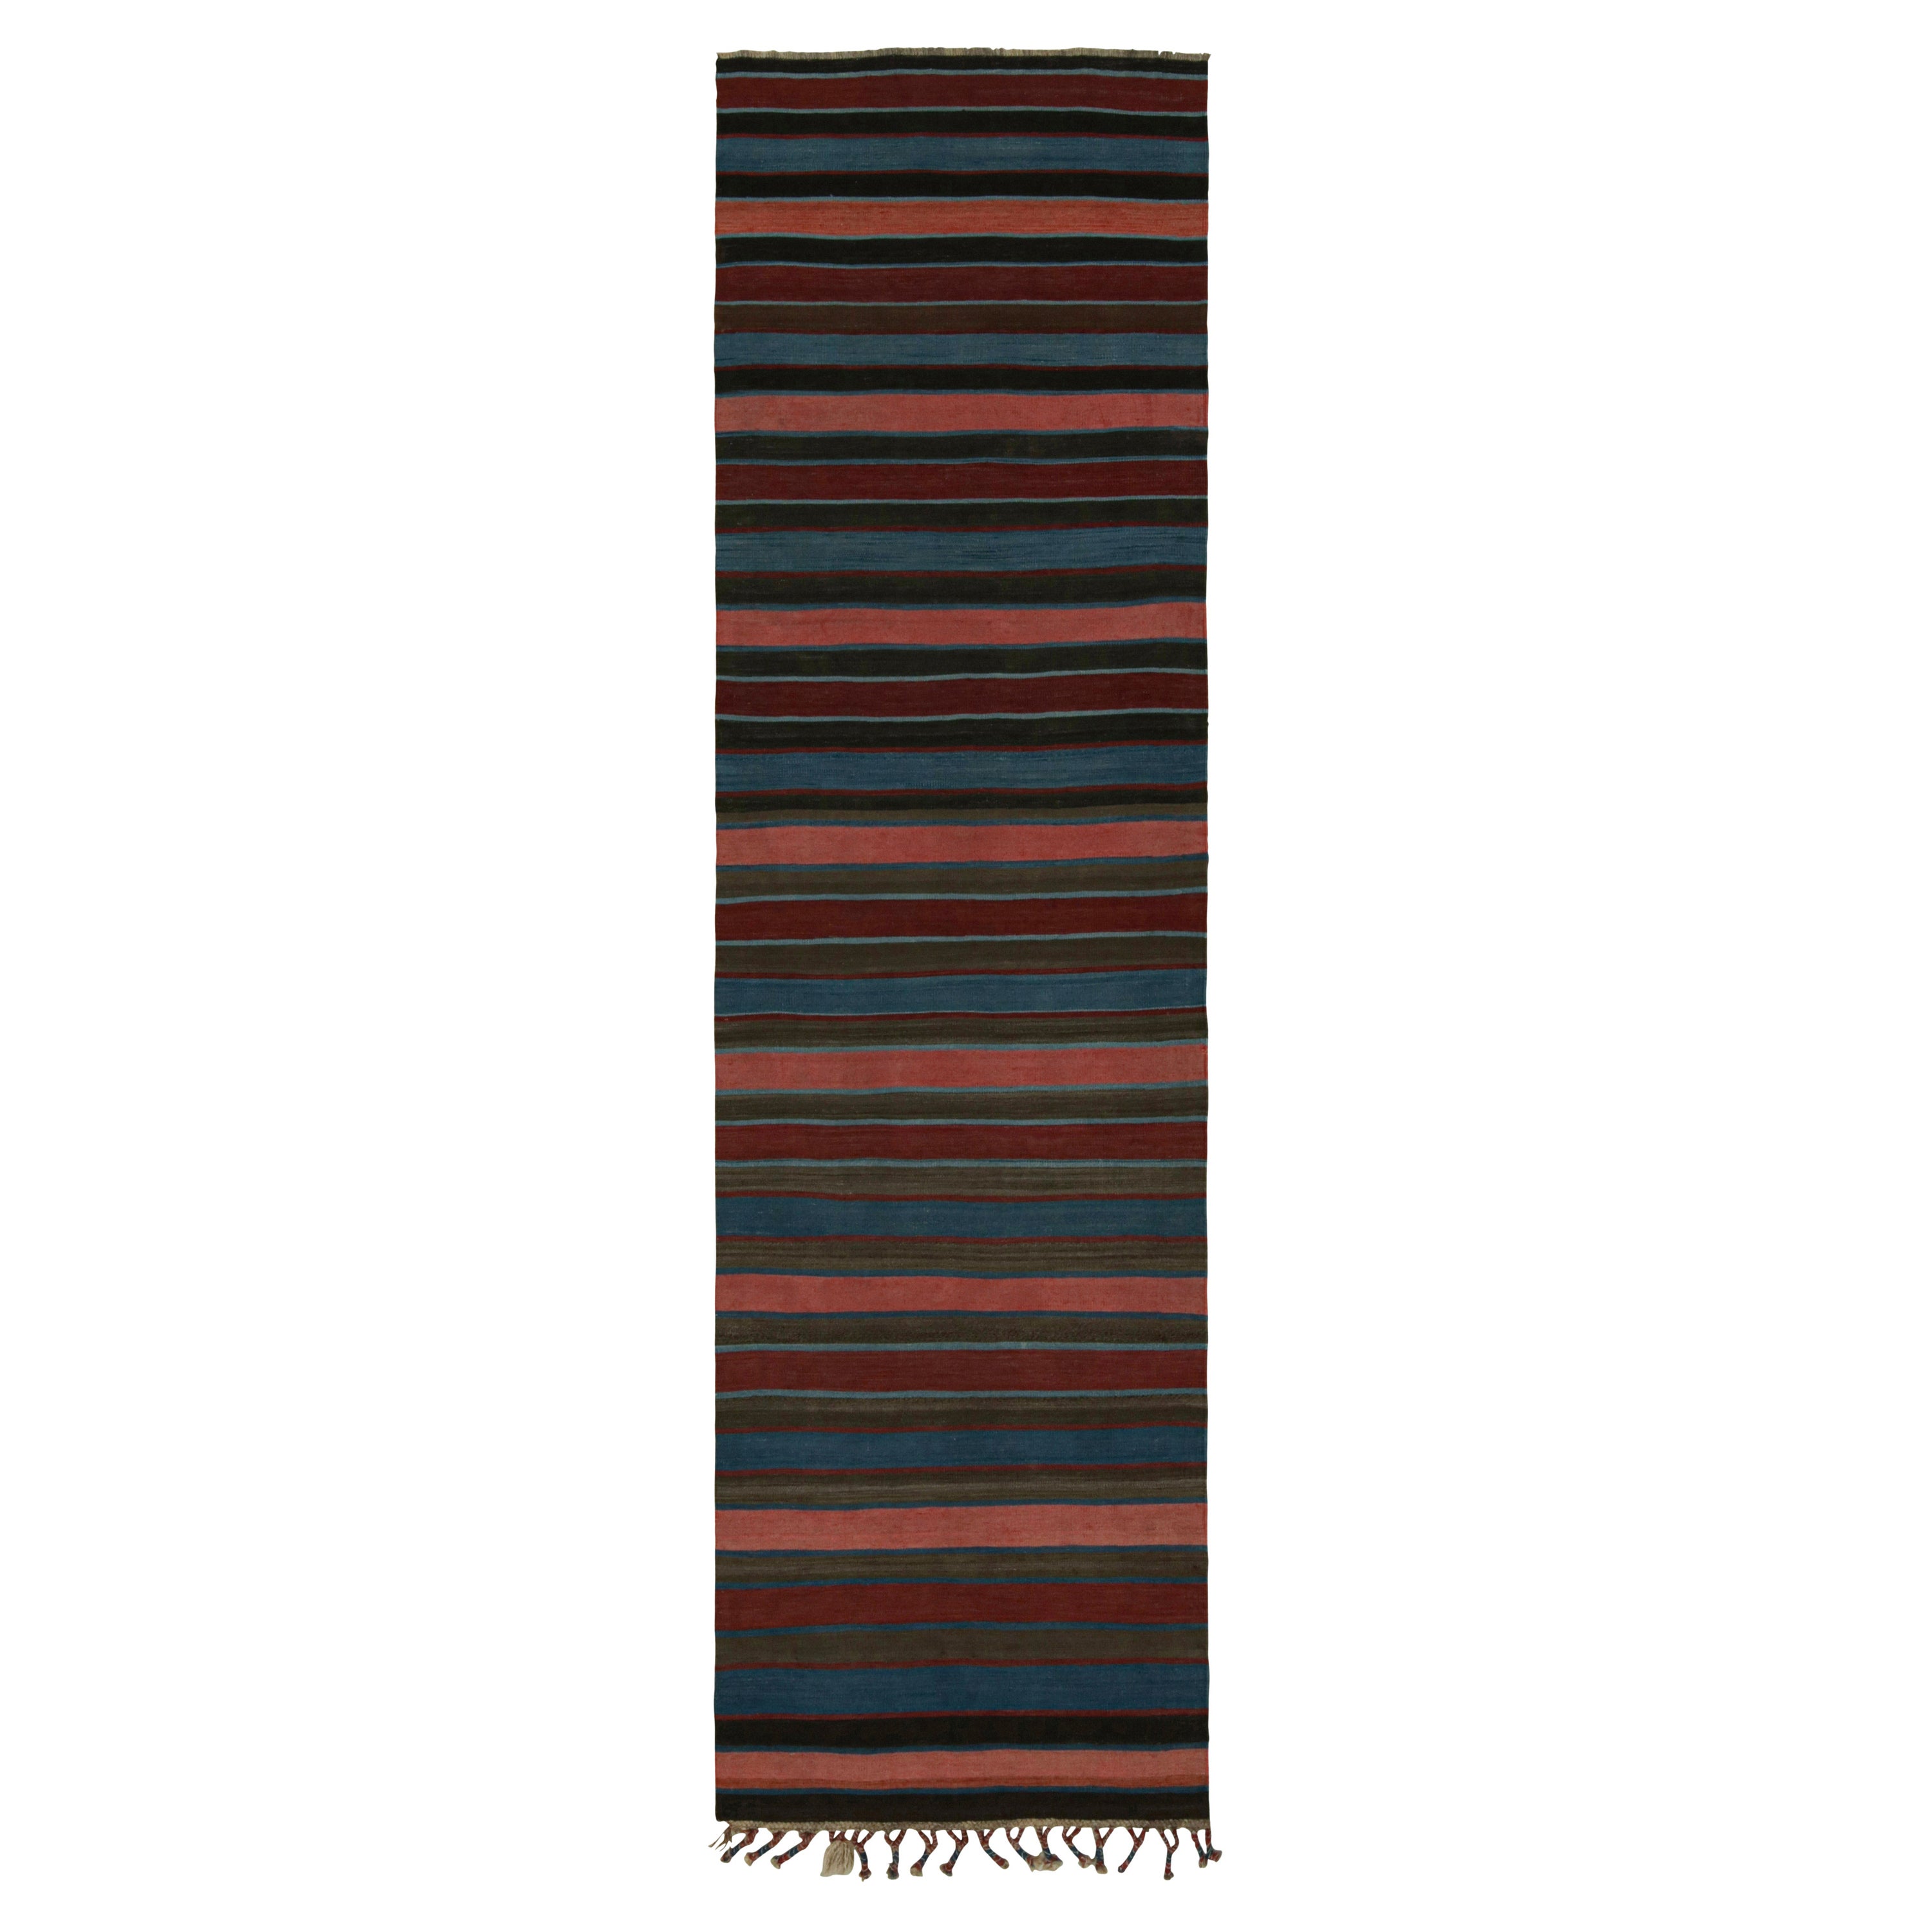 Vintage Afghani tribal Kilim runner rug, with Stripes, from Rug & Kilim For Sale